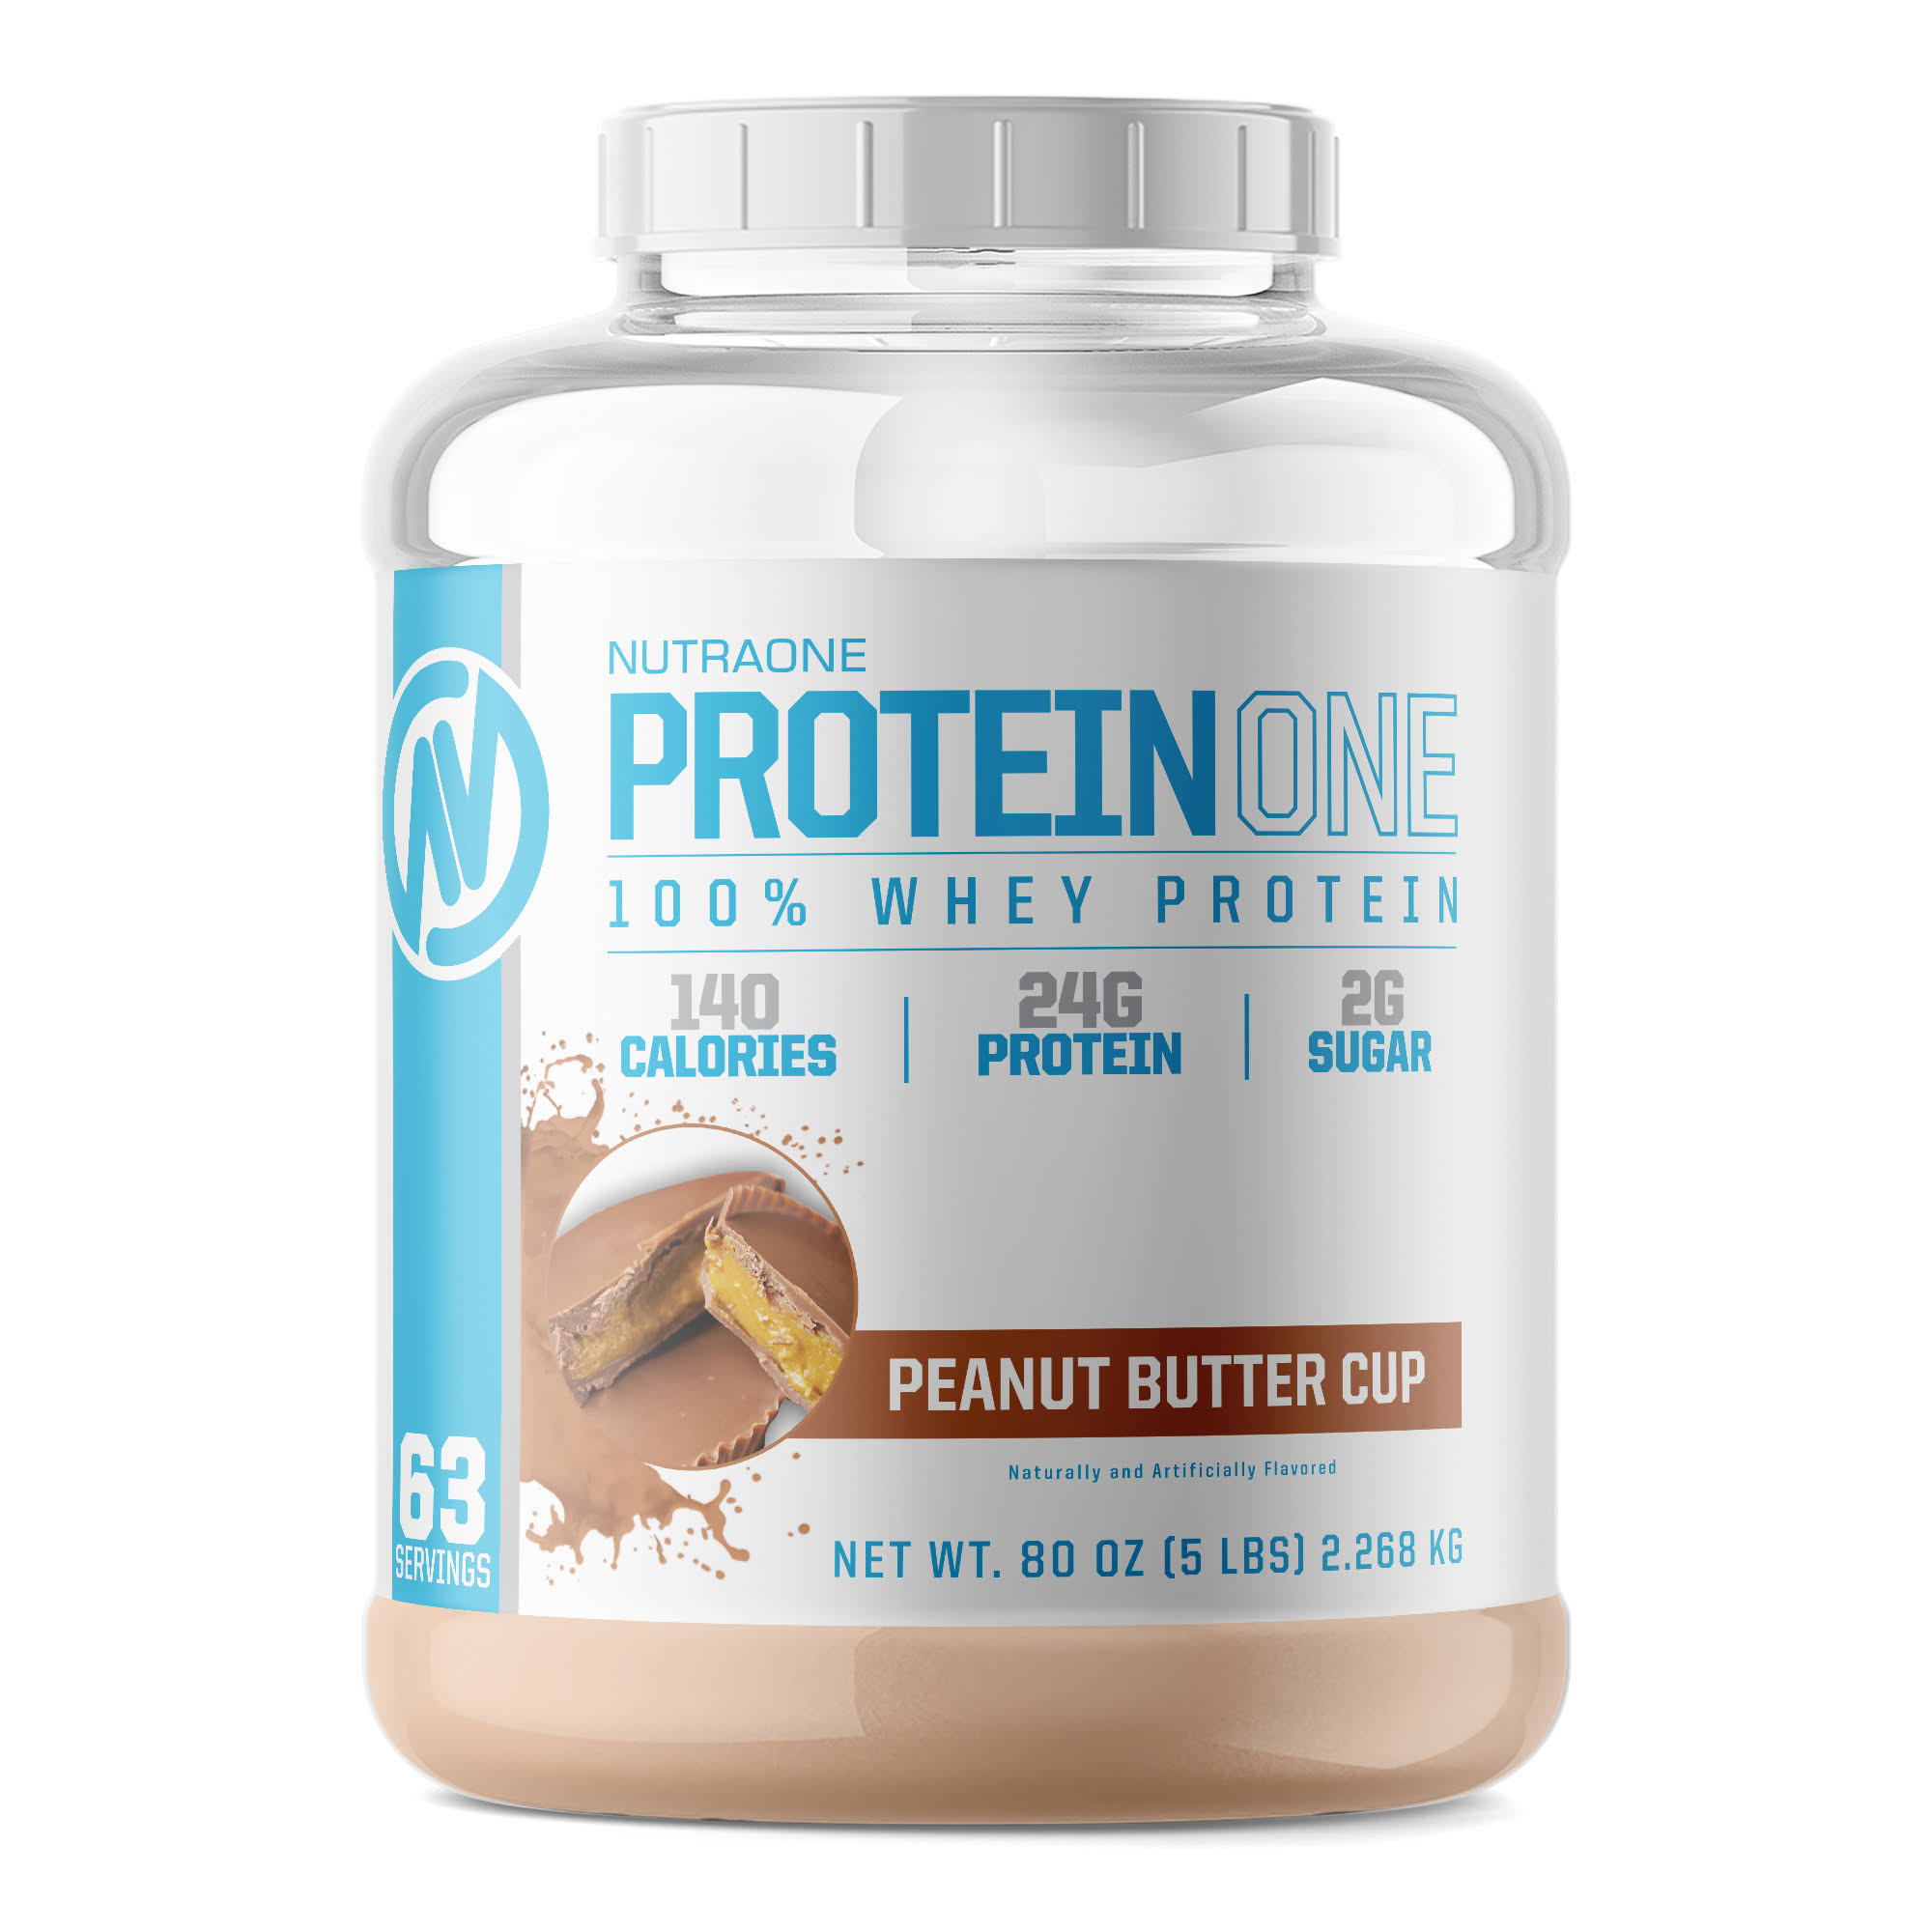 ProteinOne, 5 lb / Chocolate PB Cup